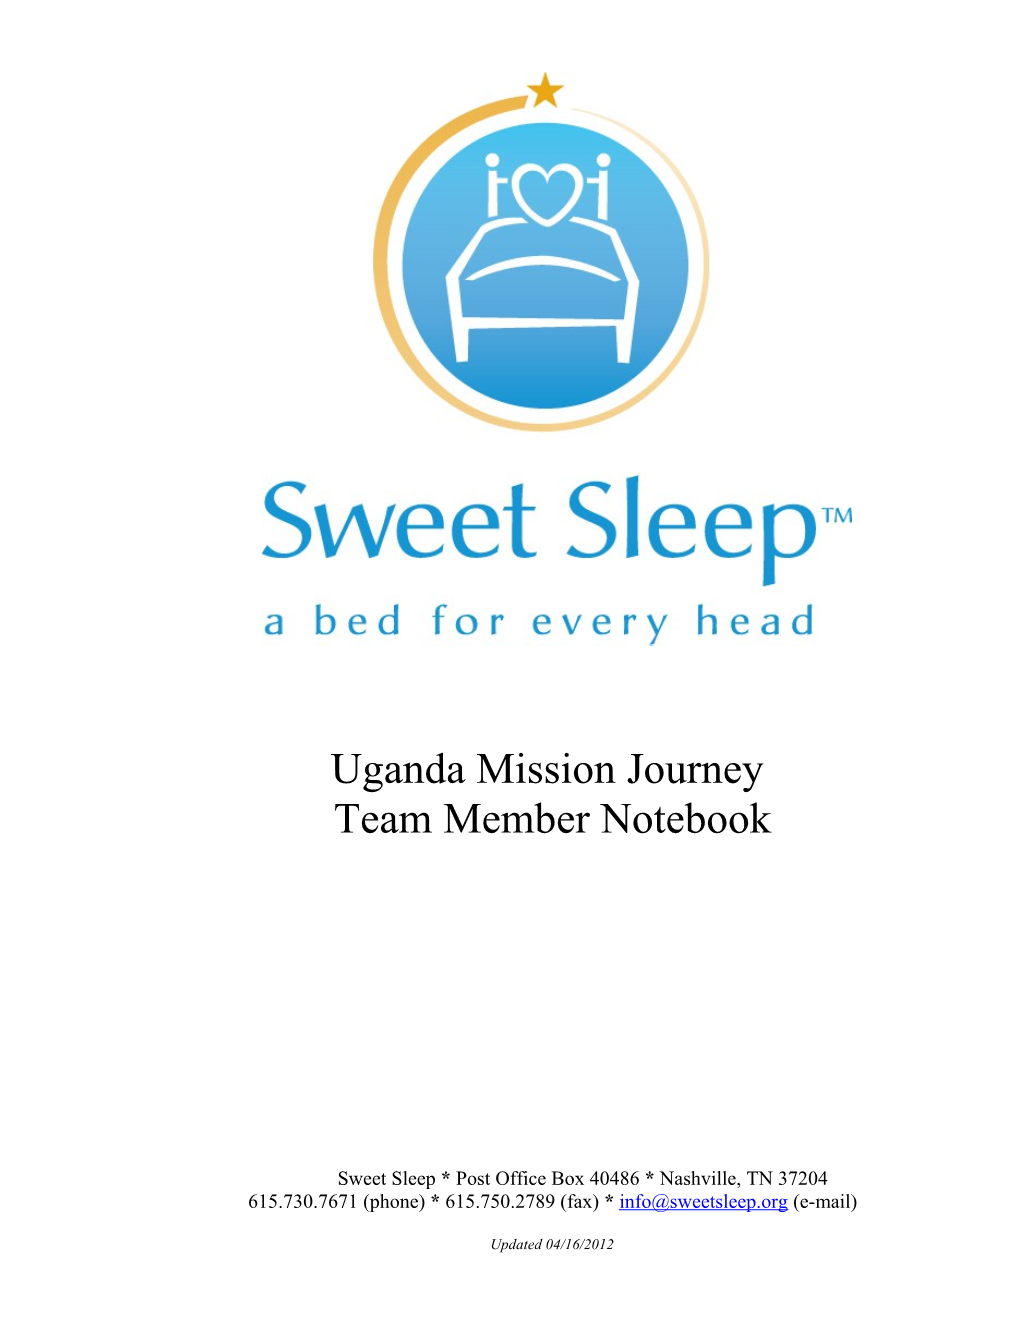 Sweet Sleep Team Notebook 2008